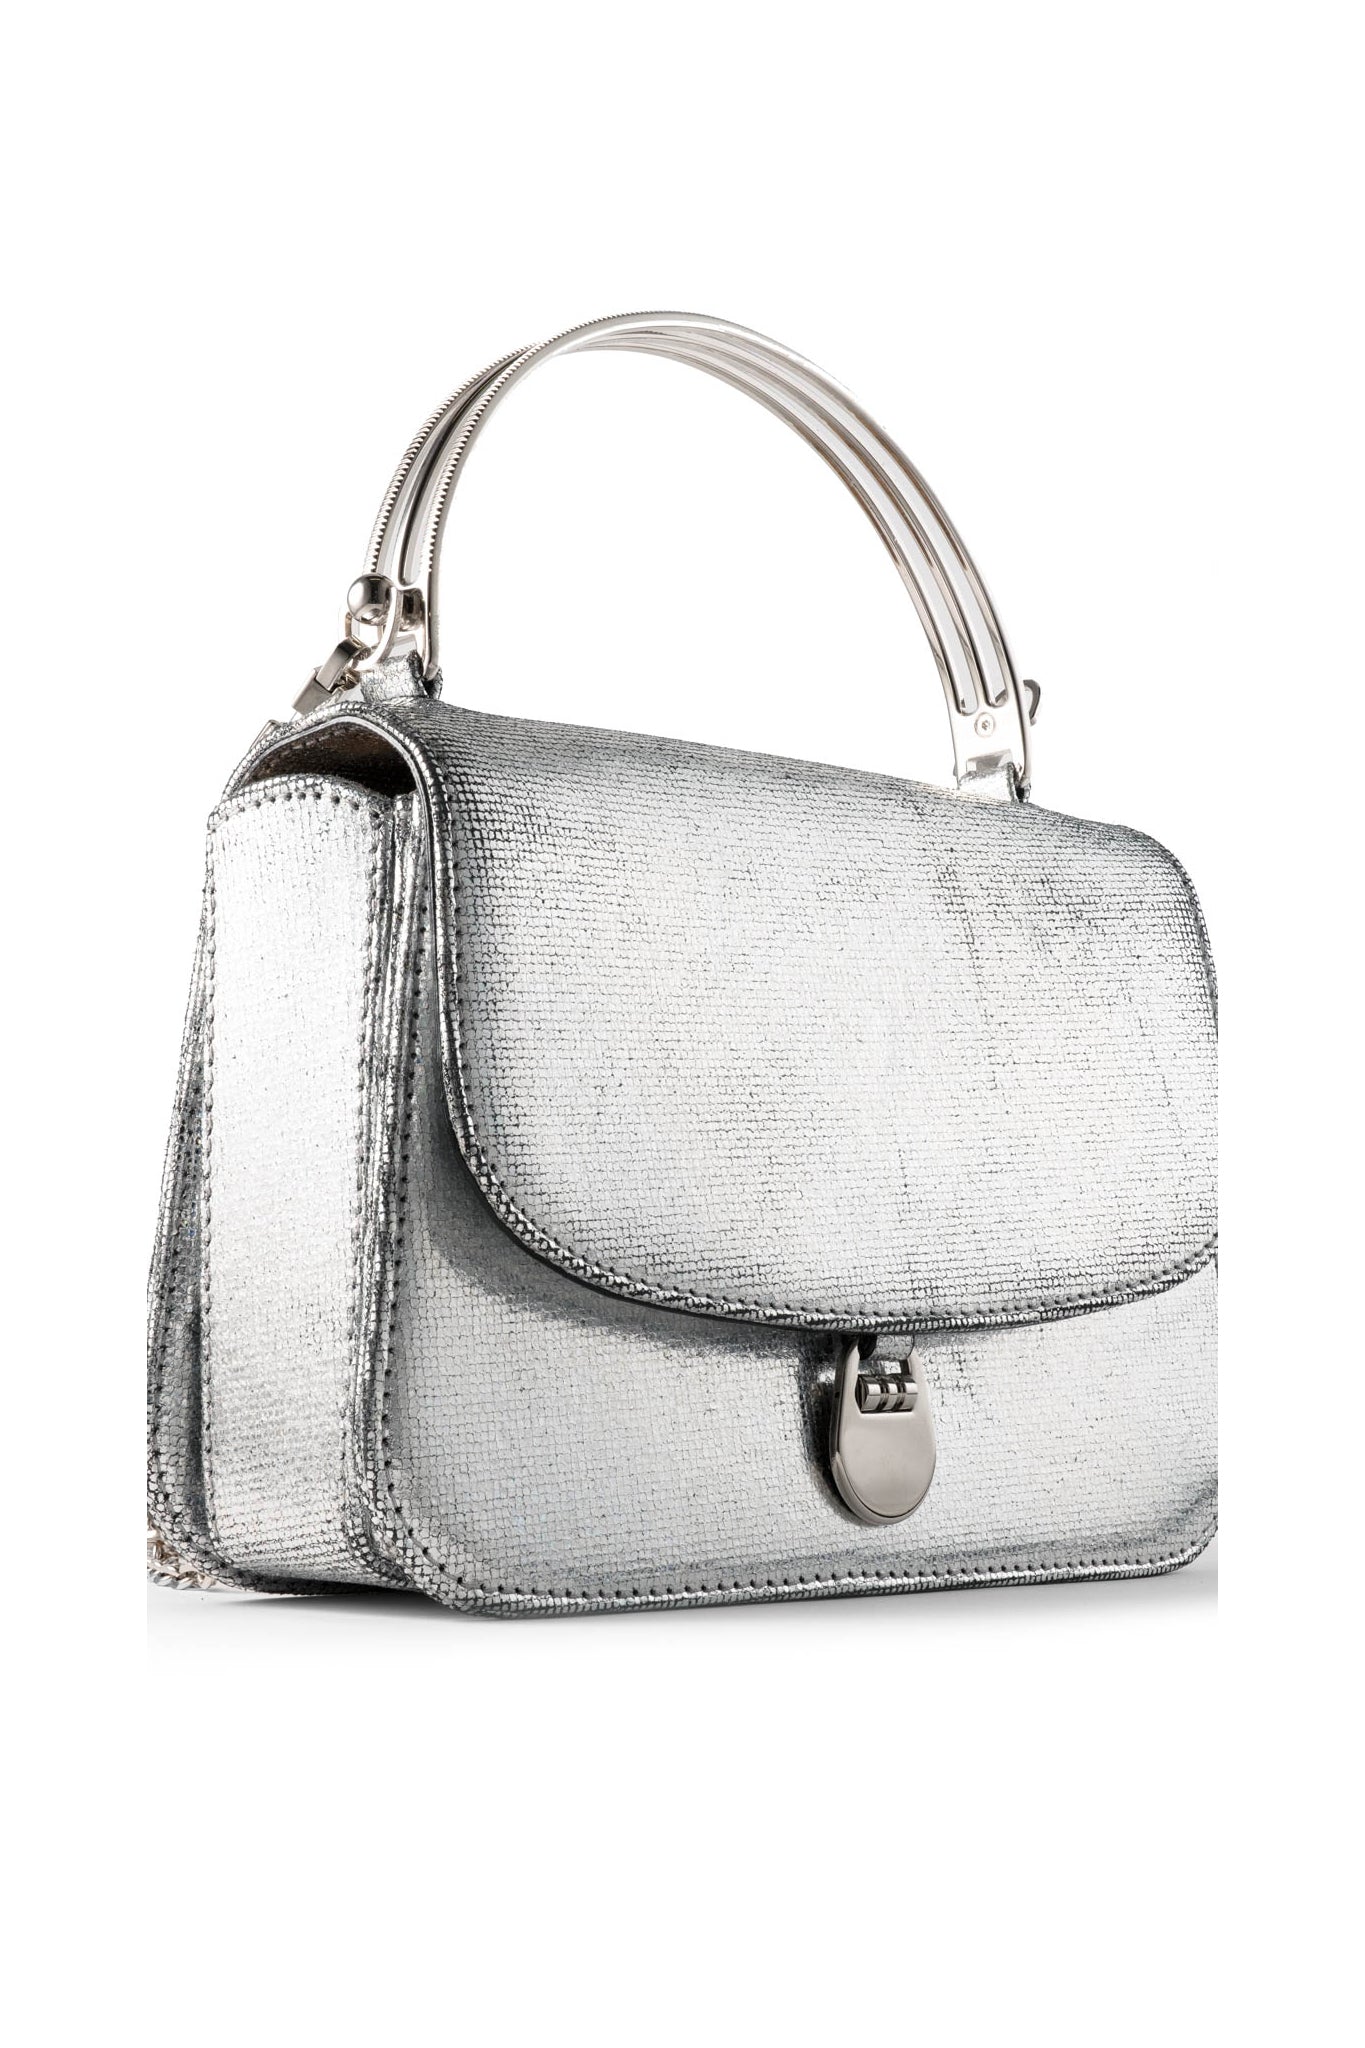 Sabi Top Handle Bag in Silver Holographic Leather – Bienen Davis